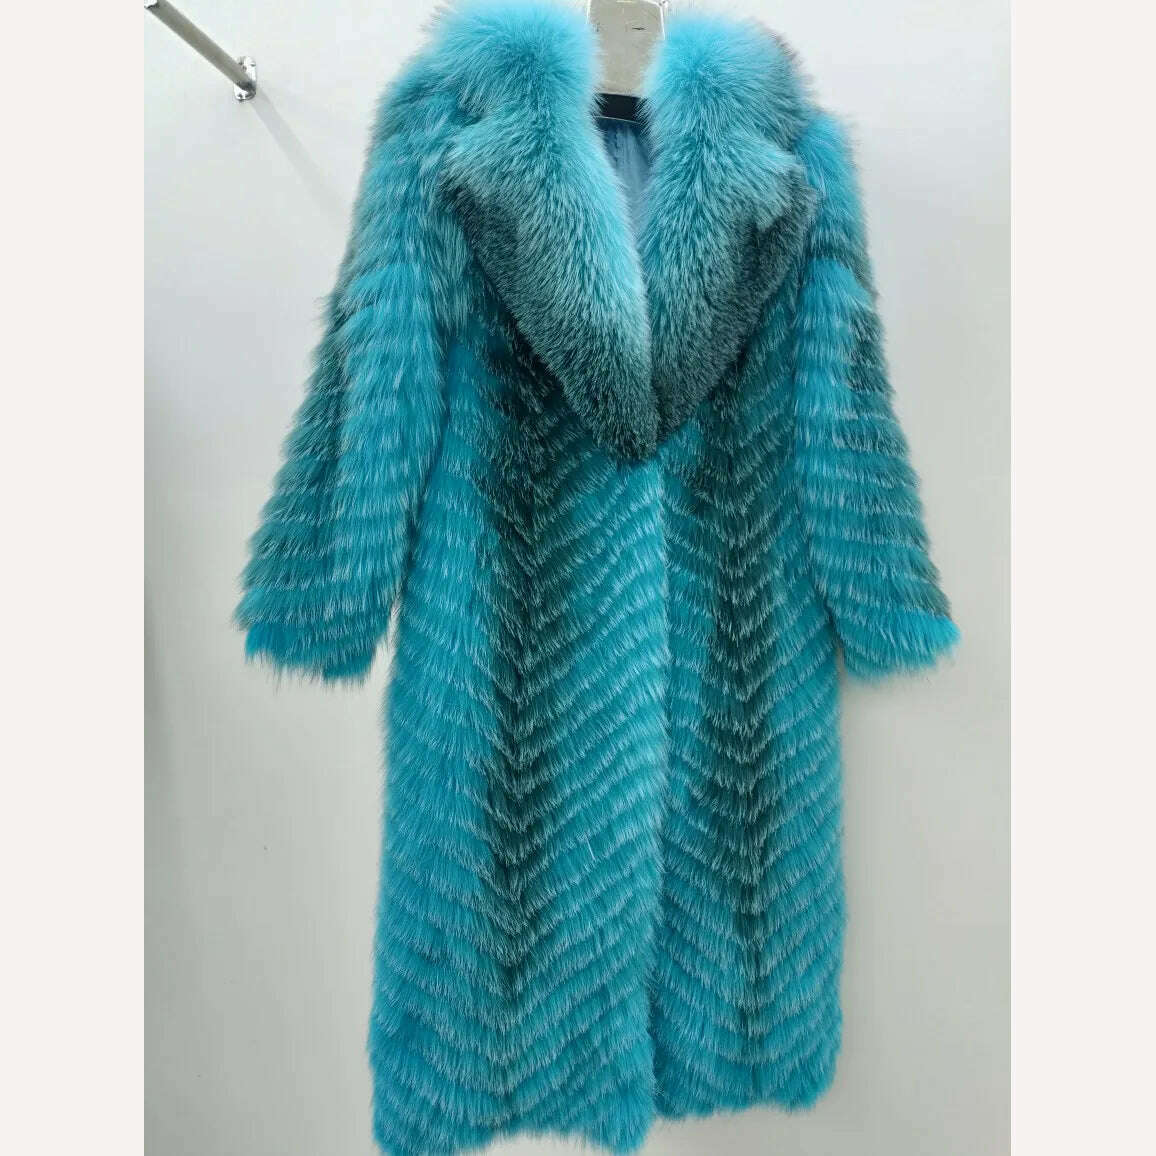 KIMLUD, Winter Long High Quality Real Cross Fox Fur Coat Women X-Length With Big Hood Pink Fashion Thicken Warm Fur Jacket Female, 1 / M bust 95cm, KIMLUD Women's Clothes